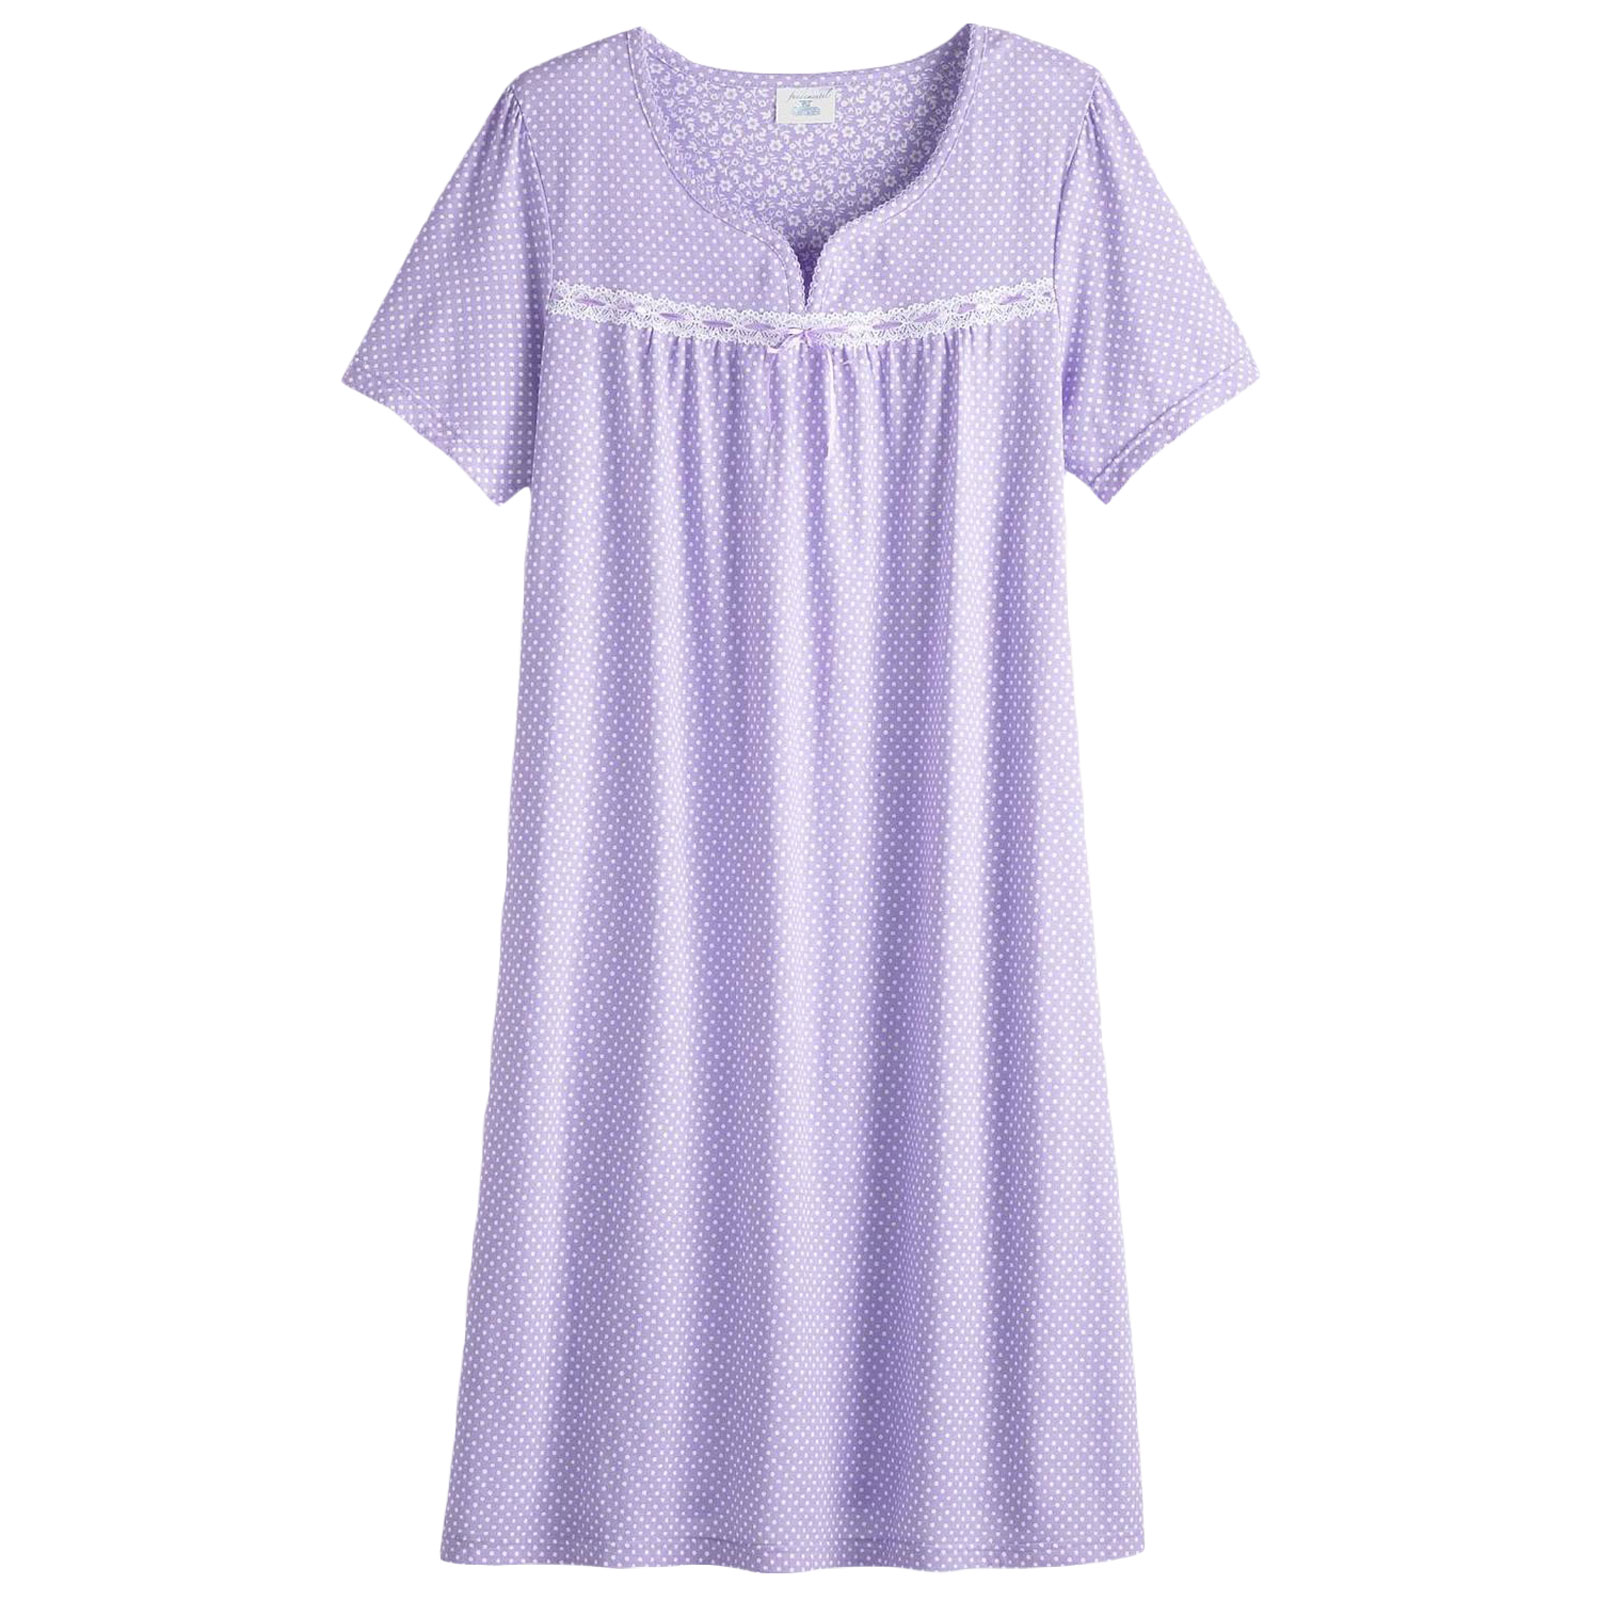 Fundamentals Women's Nightgown - Polka Dot